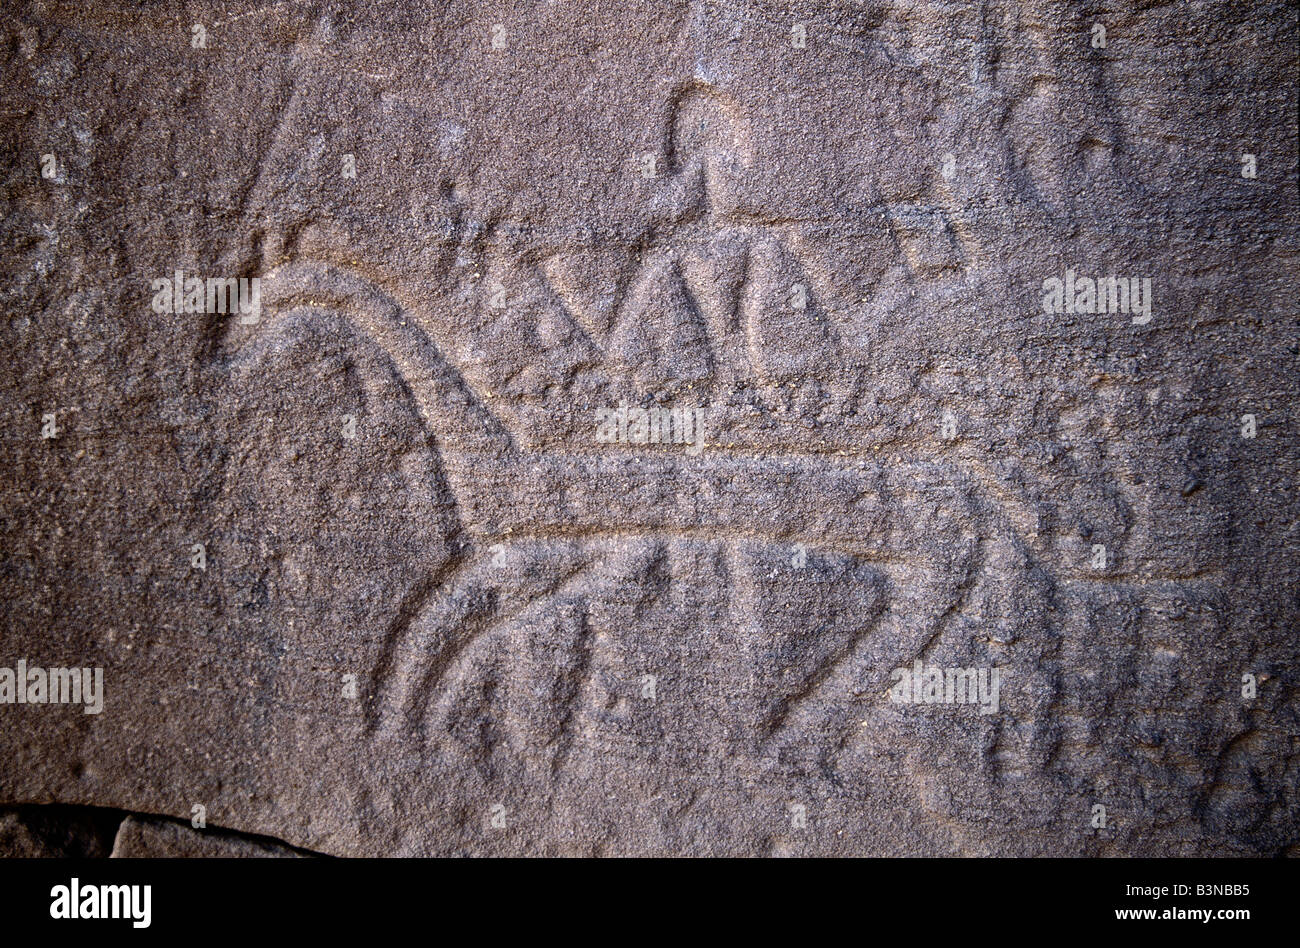 Rock carving depicts a man riding an animal at an under-hang in a mountain at Wadi Al Hayat, Fezzan, Libya. Stock Photo